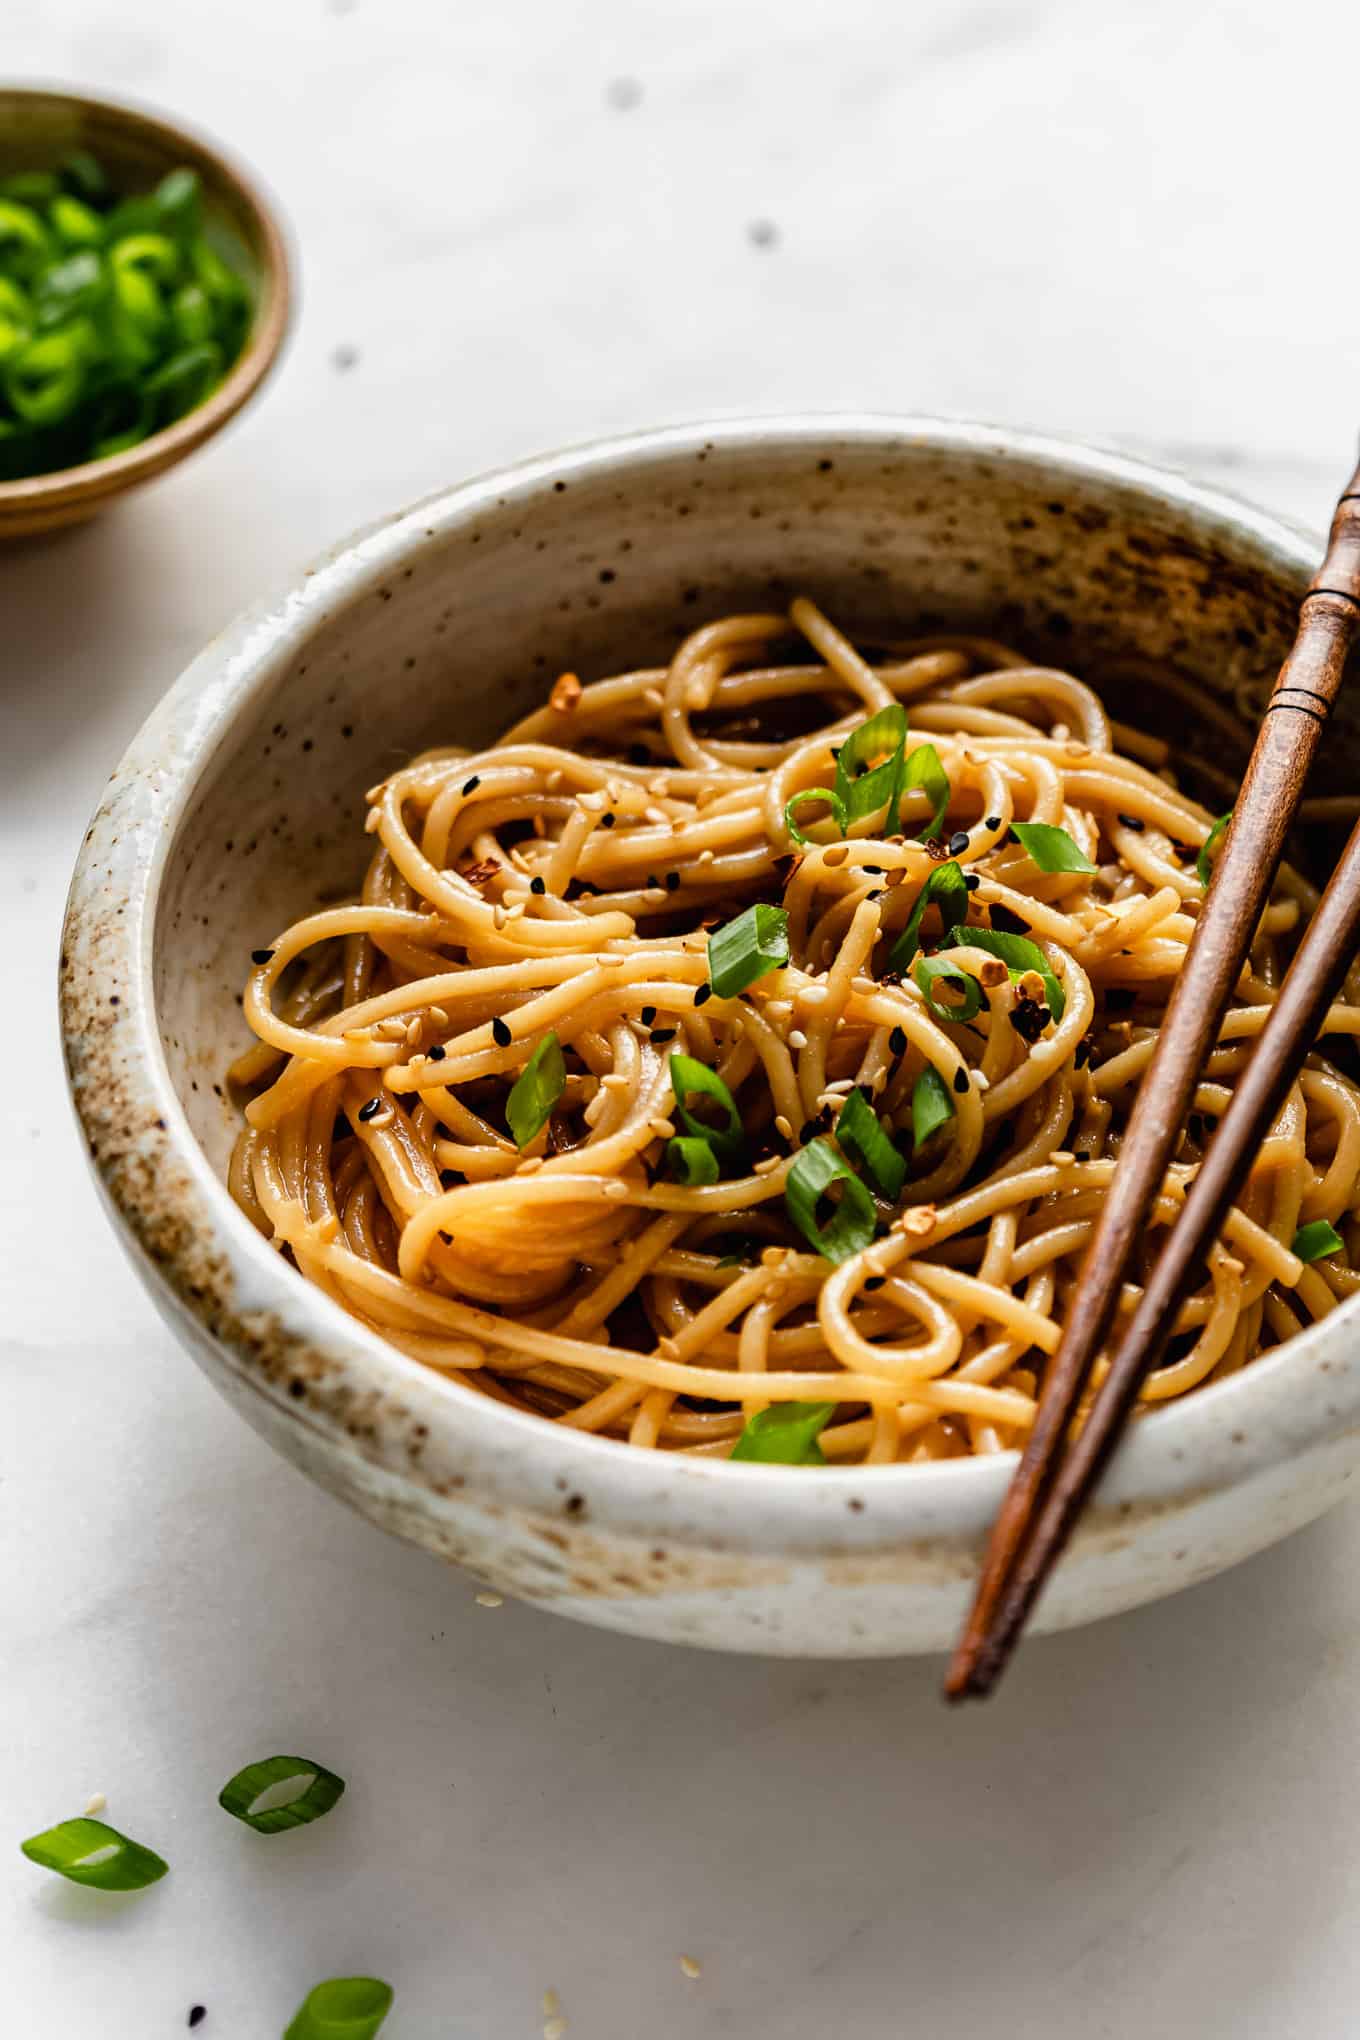 https://choosingchia.com/jessh-jessh/uploads/2022/07/garlic-noodles-3-1.jpg